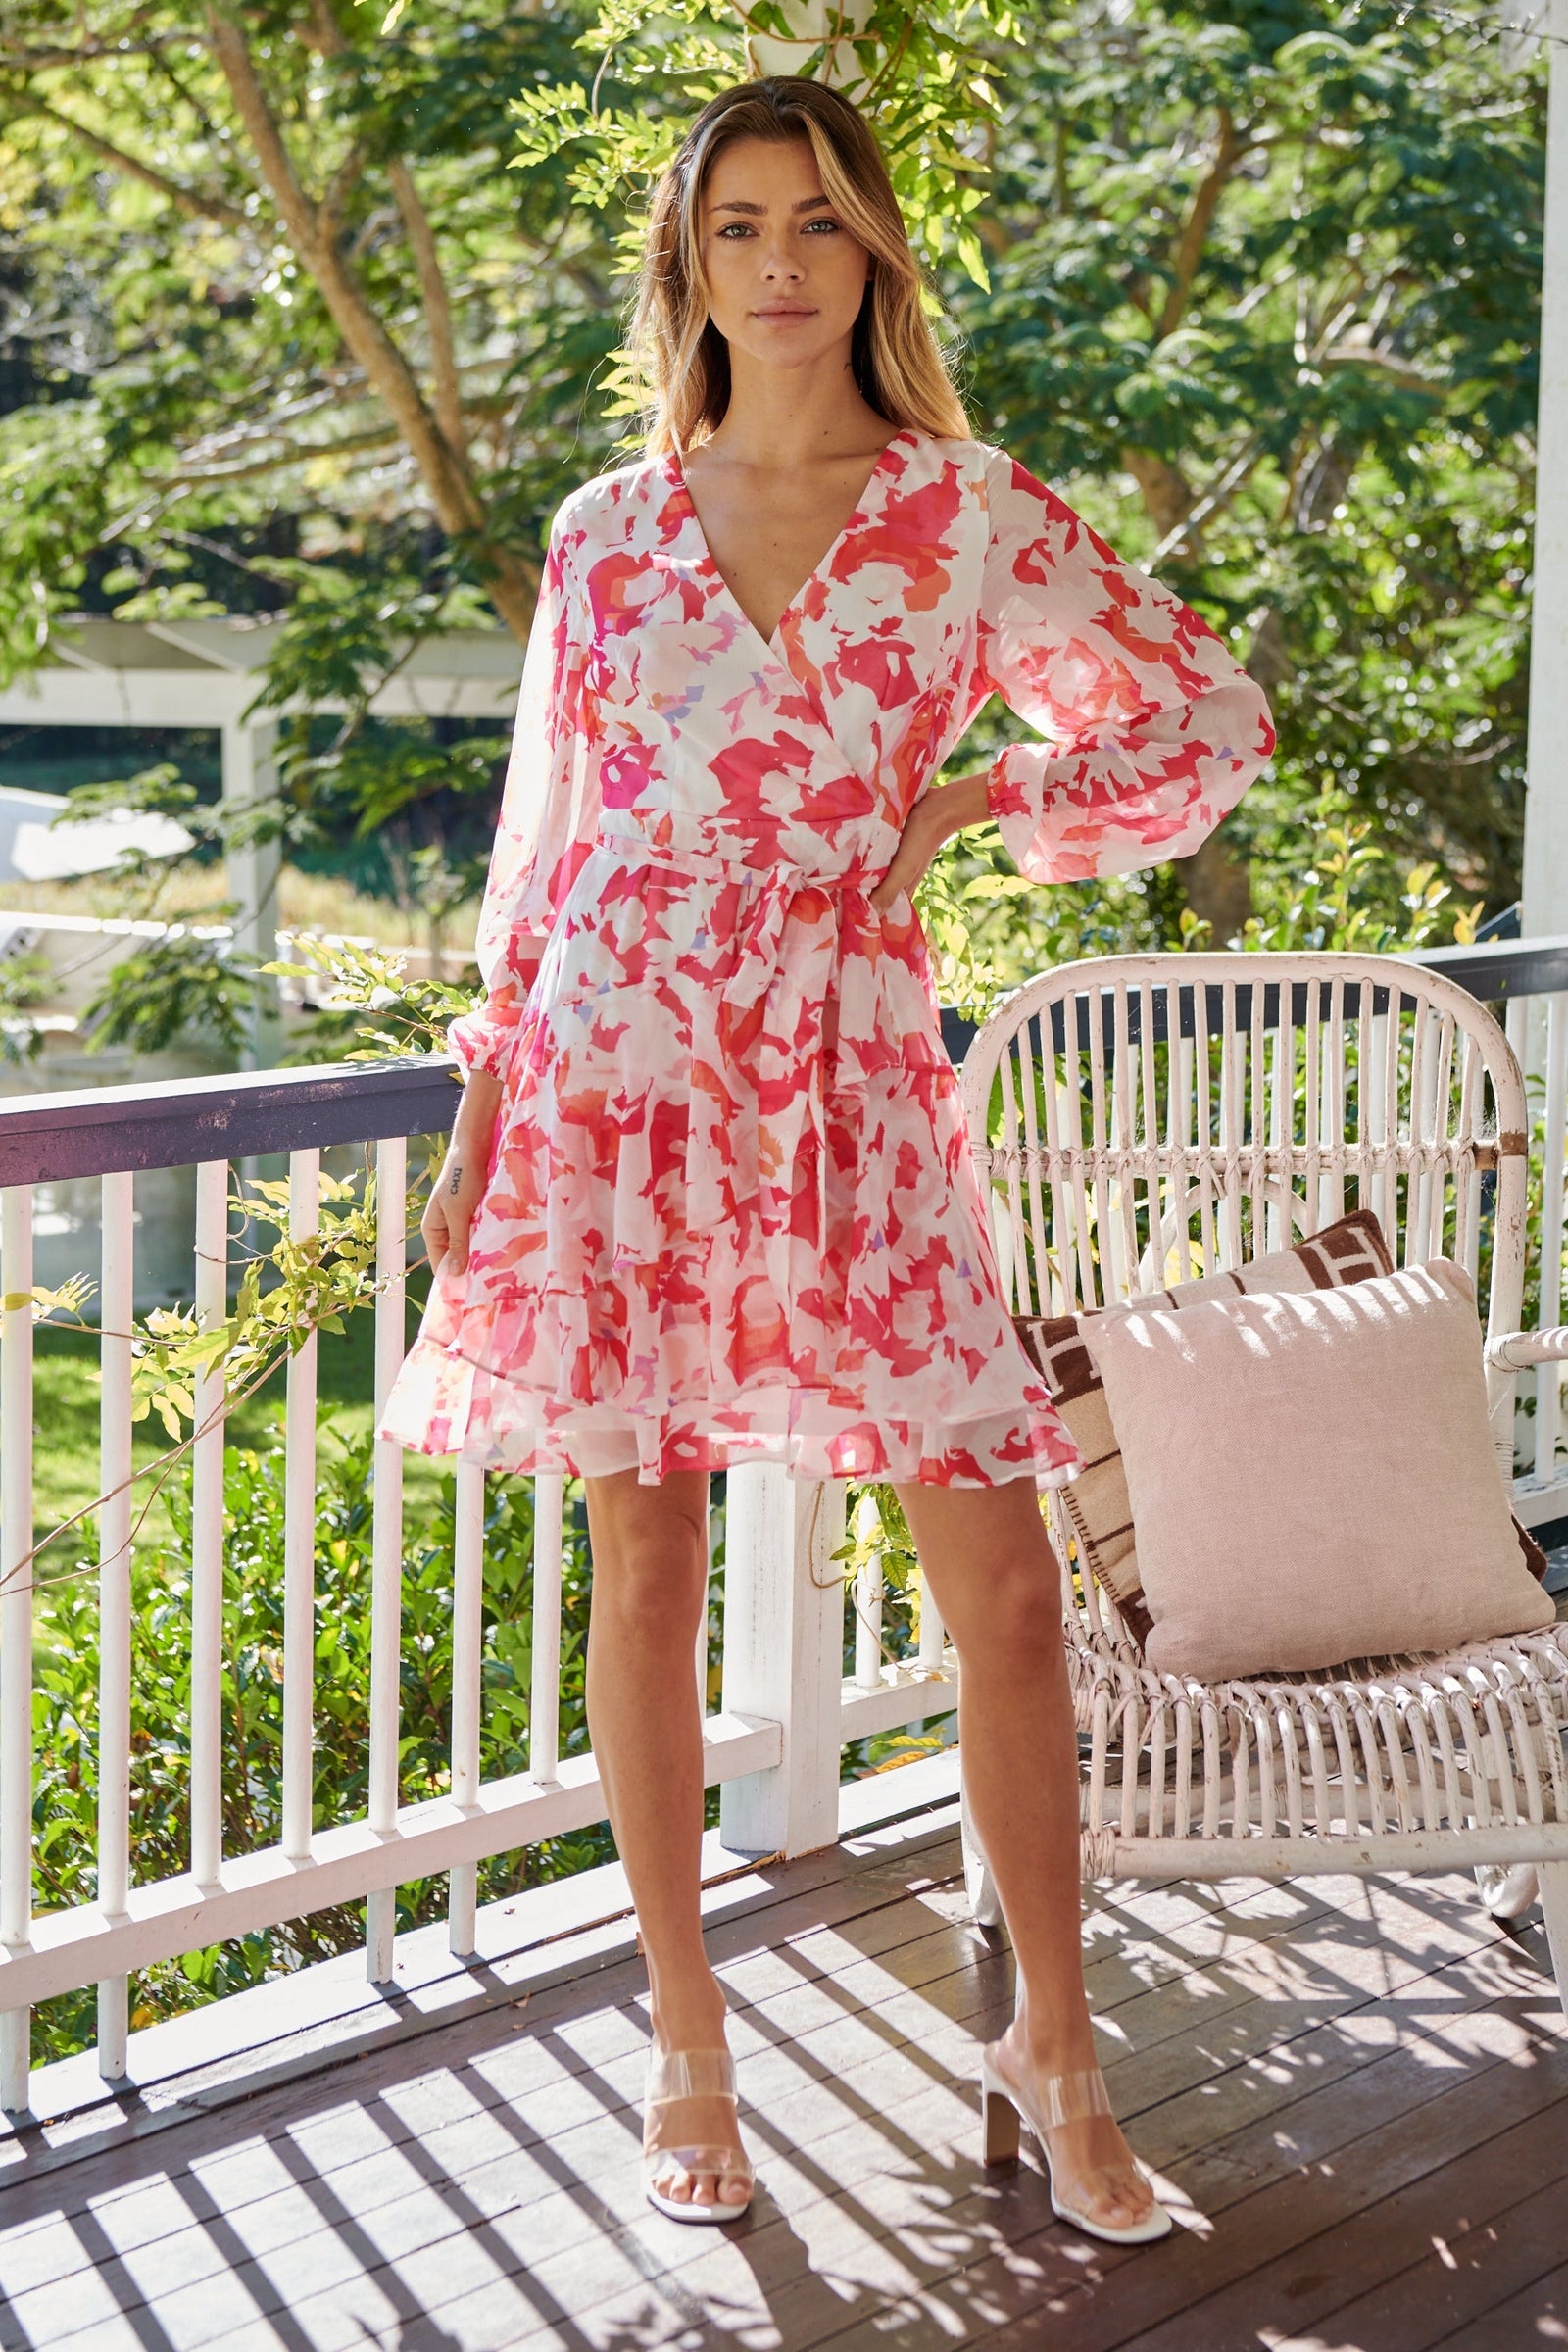 Lara Chiffon Pink/White Floral Evening Dress